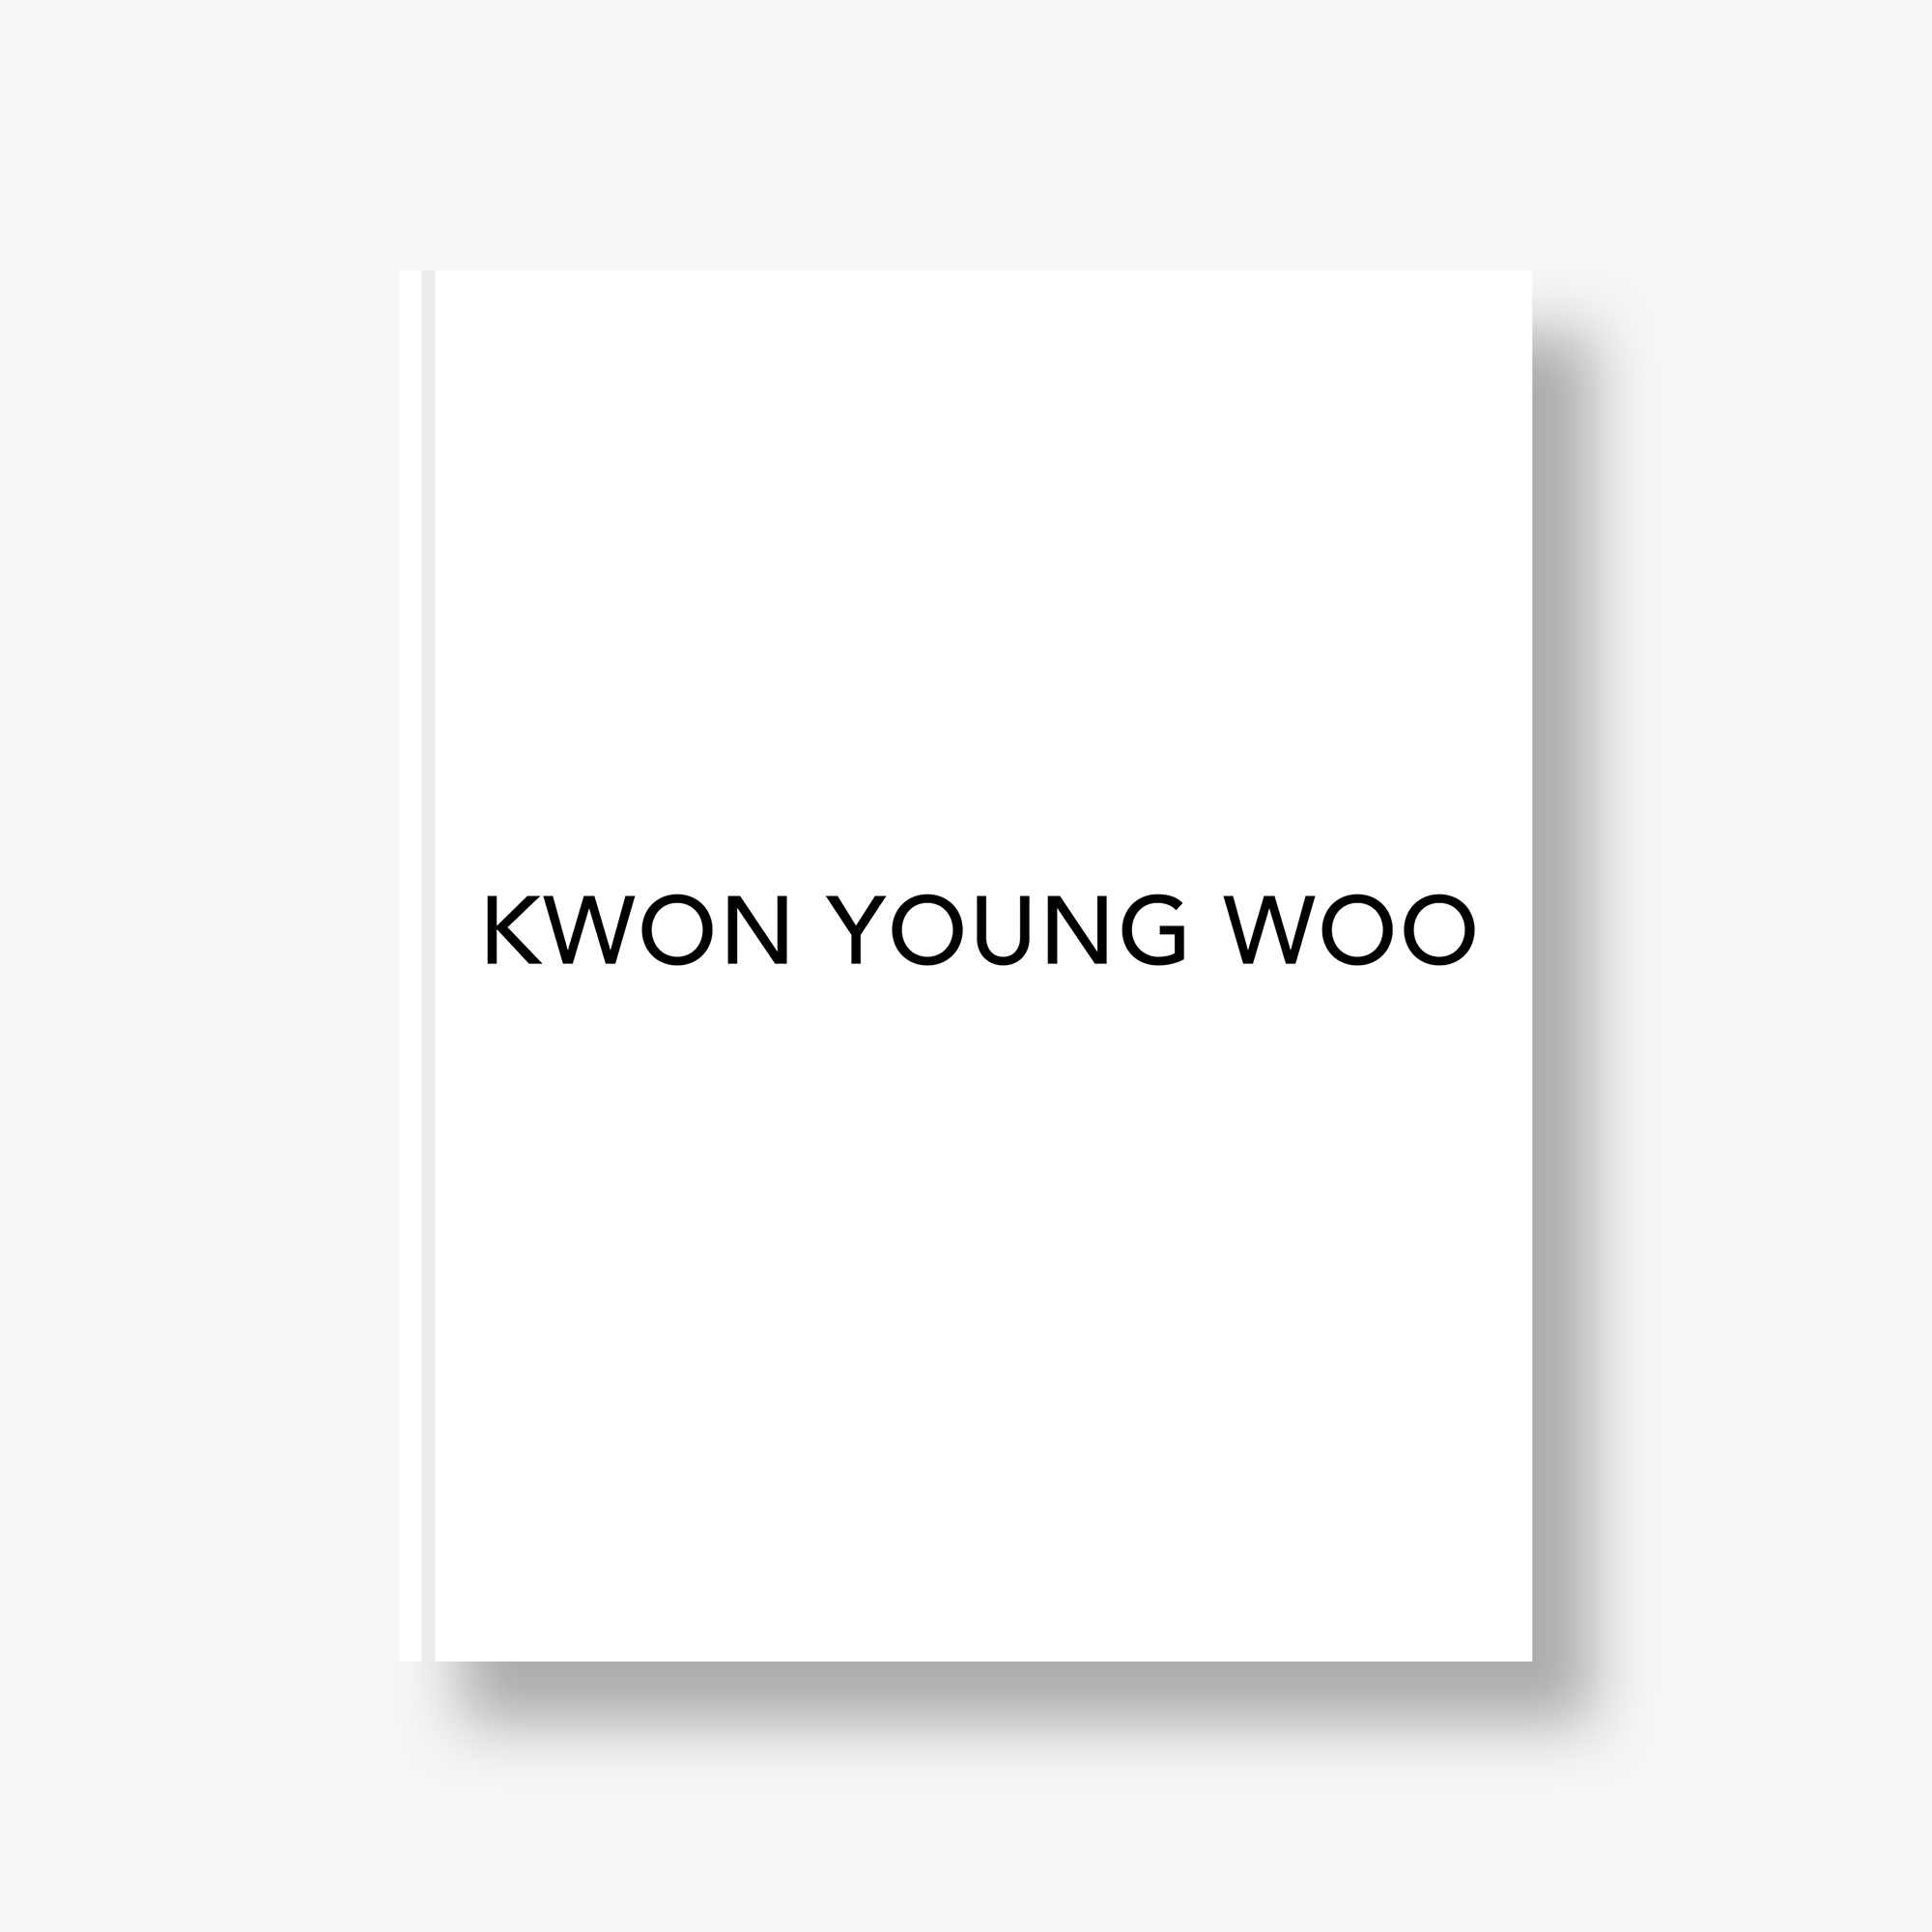 KWON YOUNG WOO